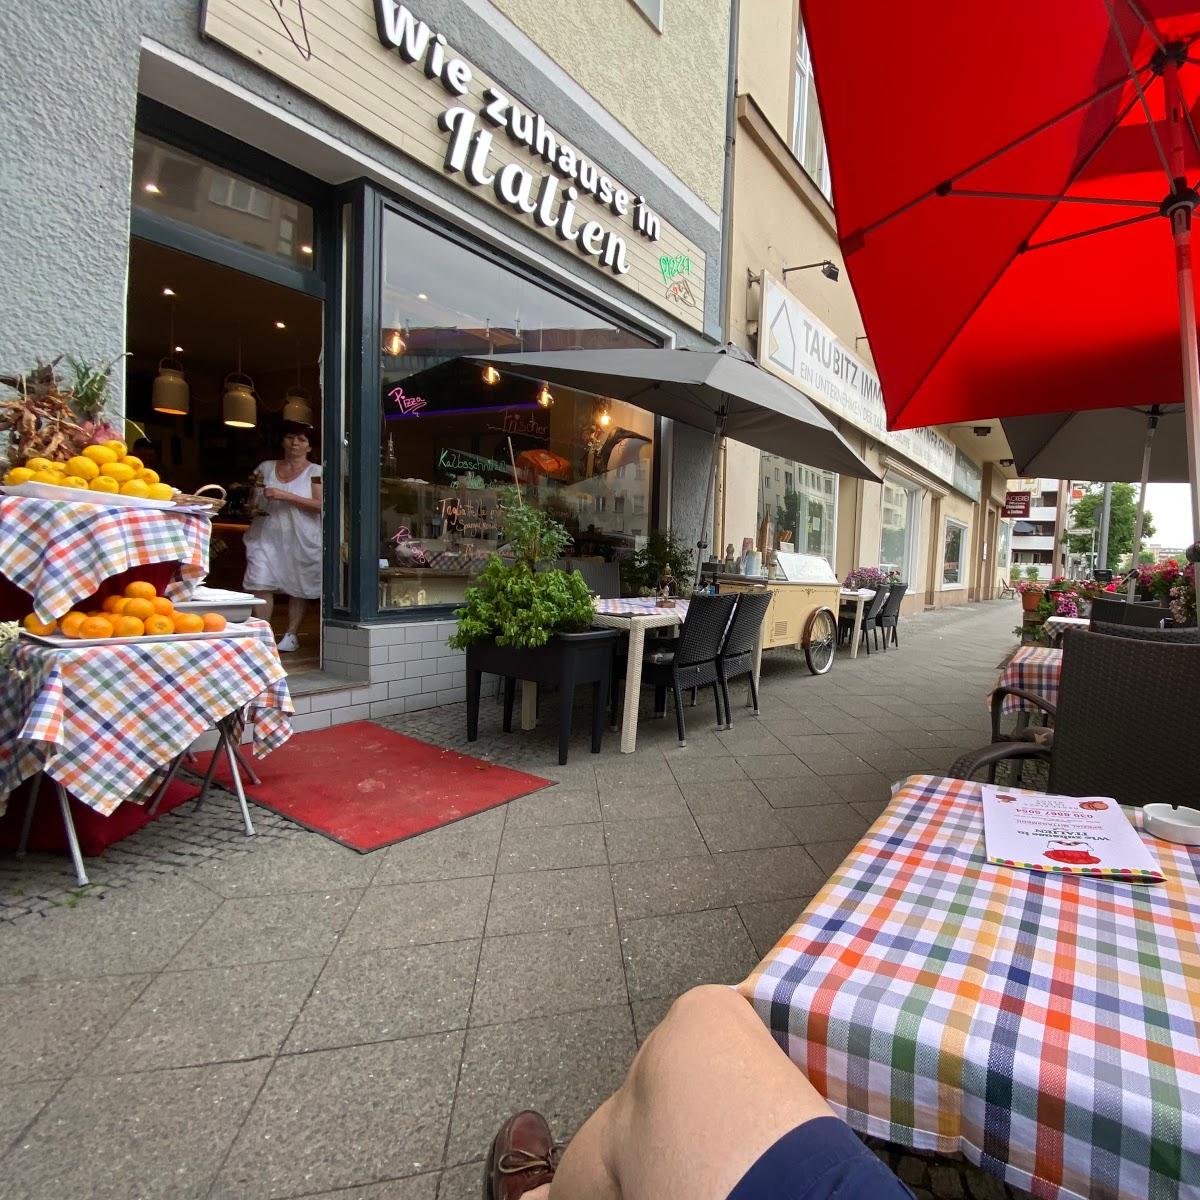 Restaurant "Wie zuhause in Italien" in Berlin